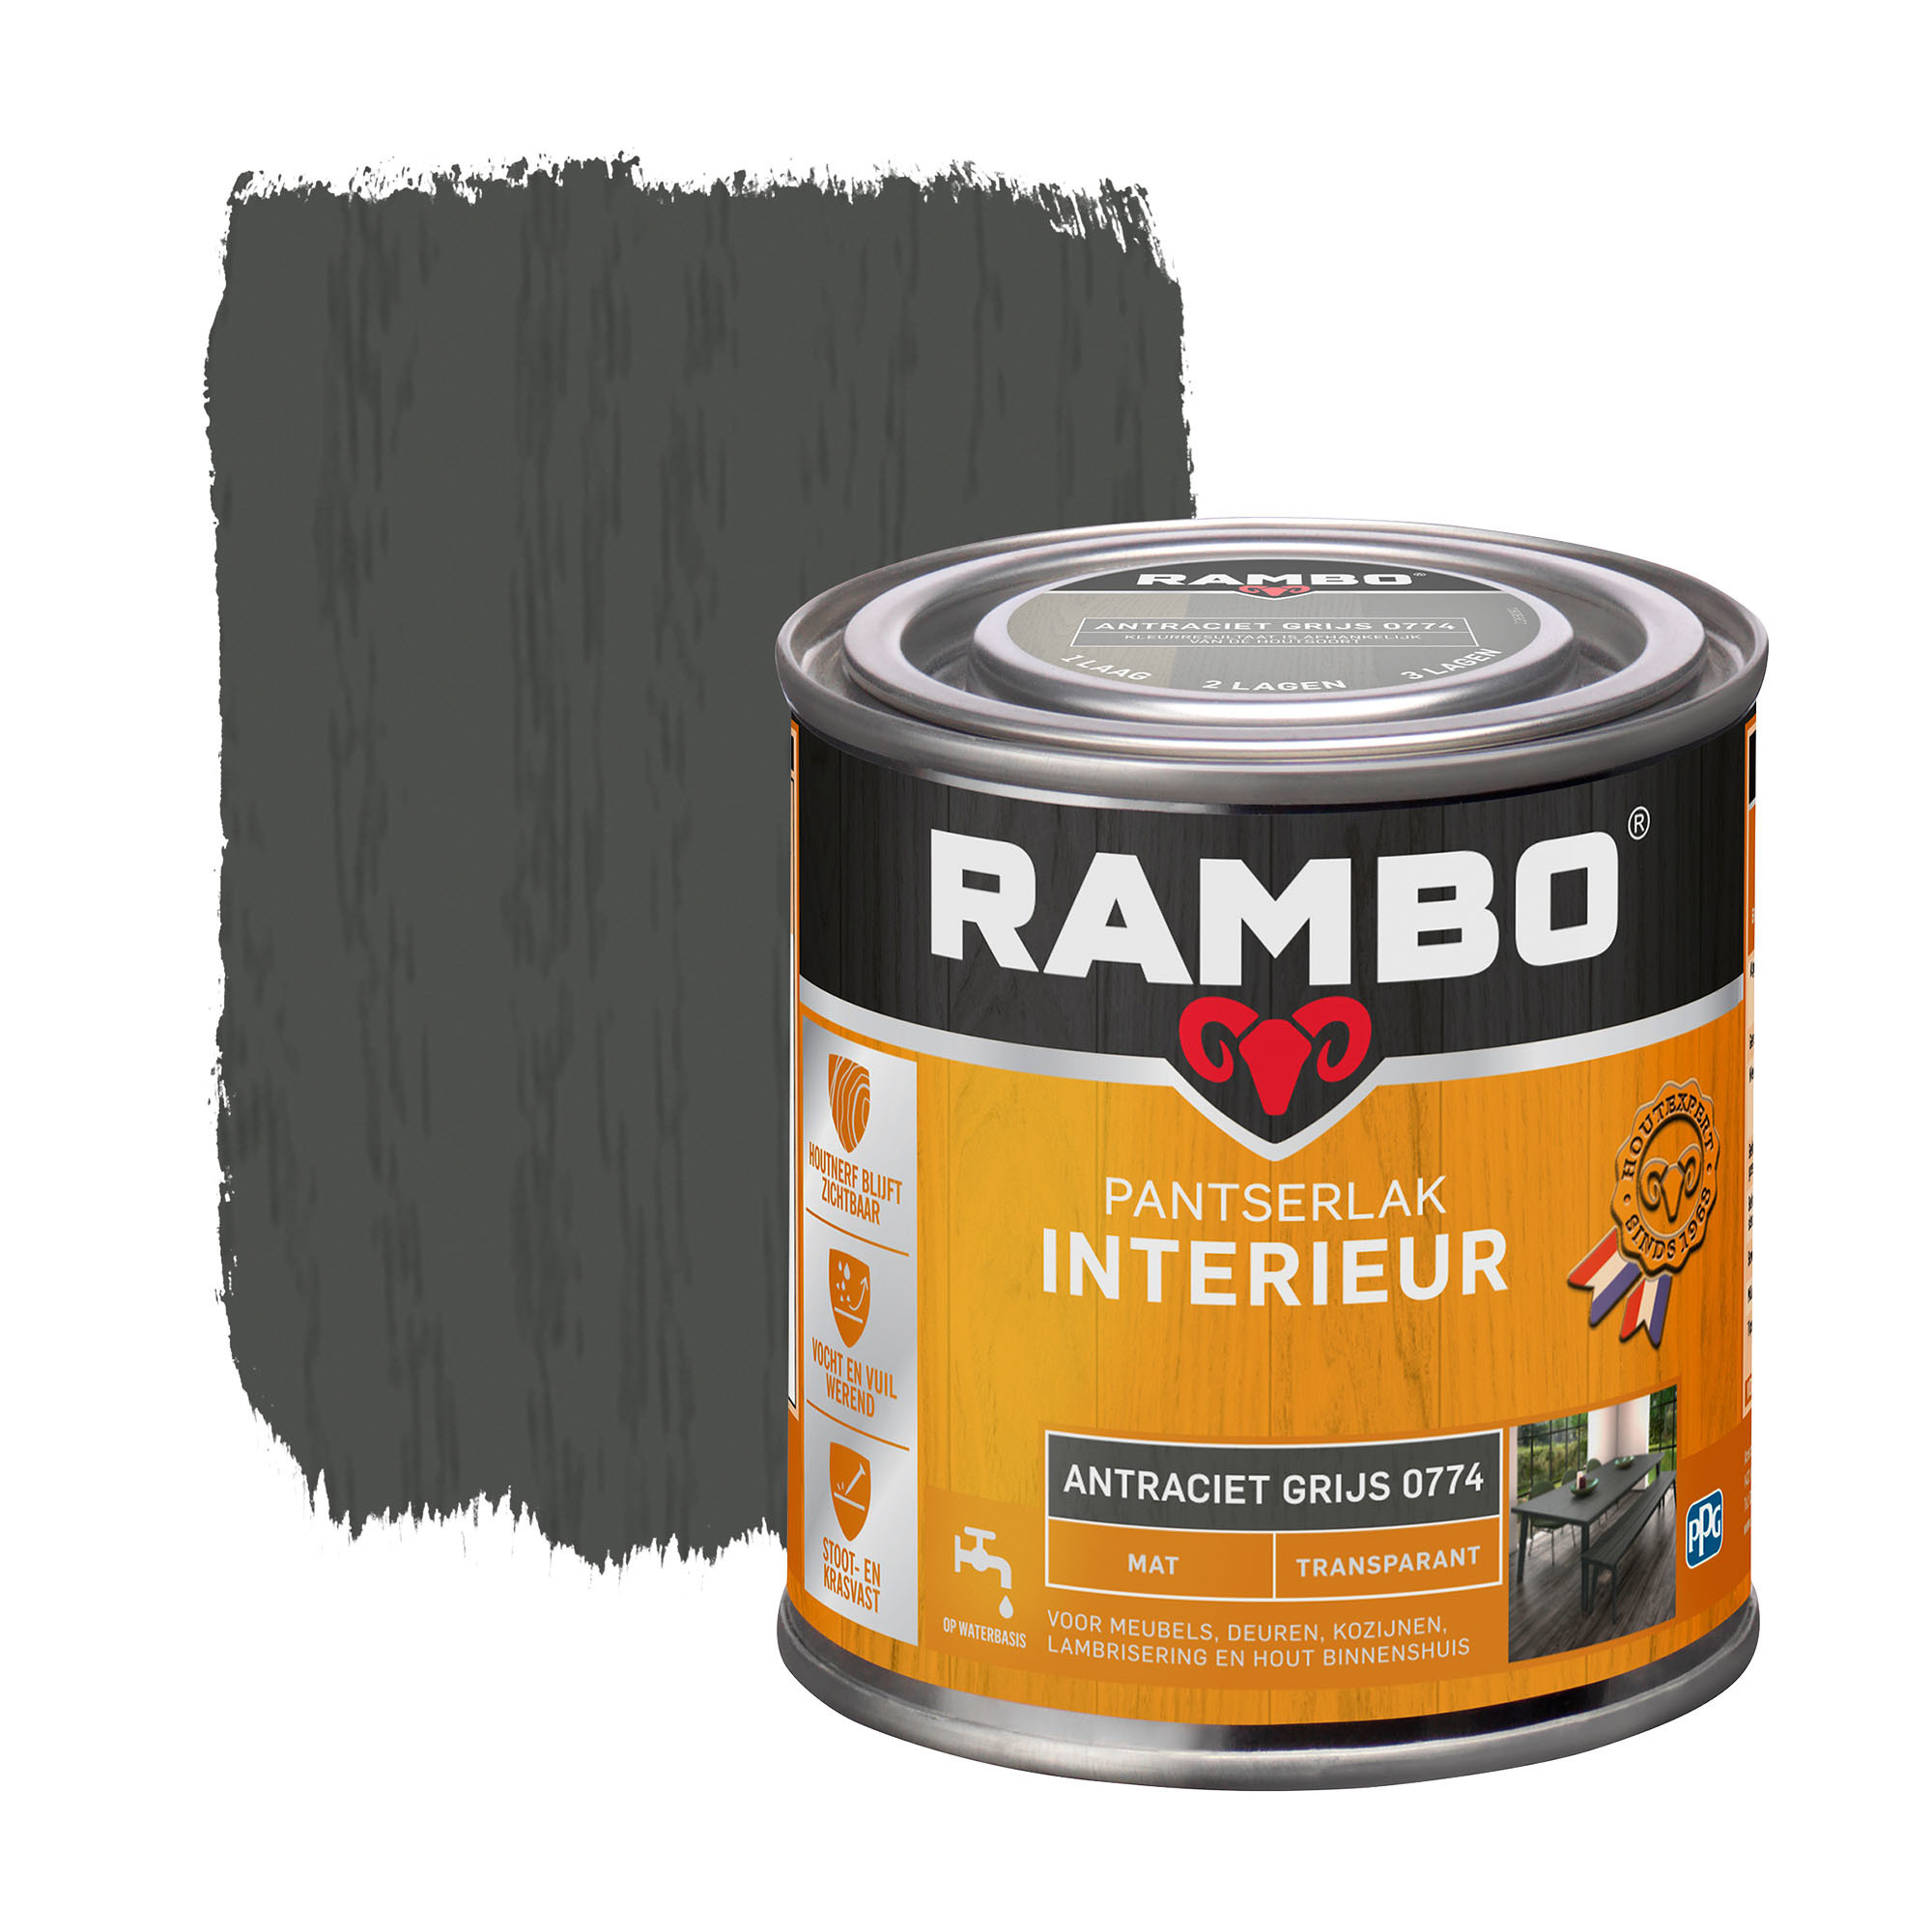 Rambo Pantserlak Interieur Transparant Mat - Antraciet grijs